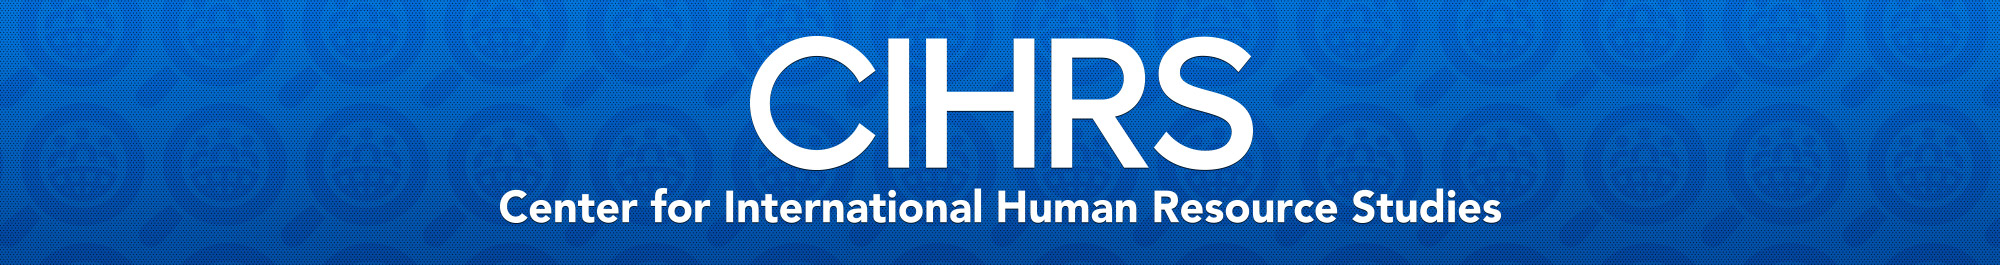 Center for International Human Resource Studies